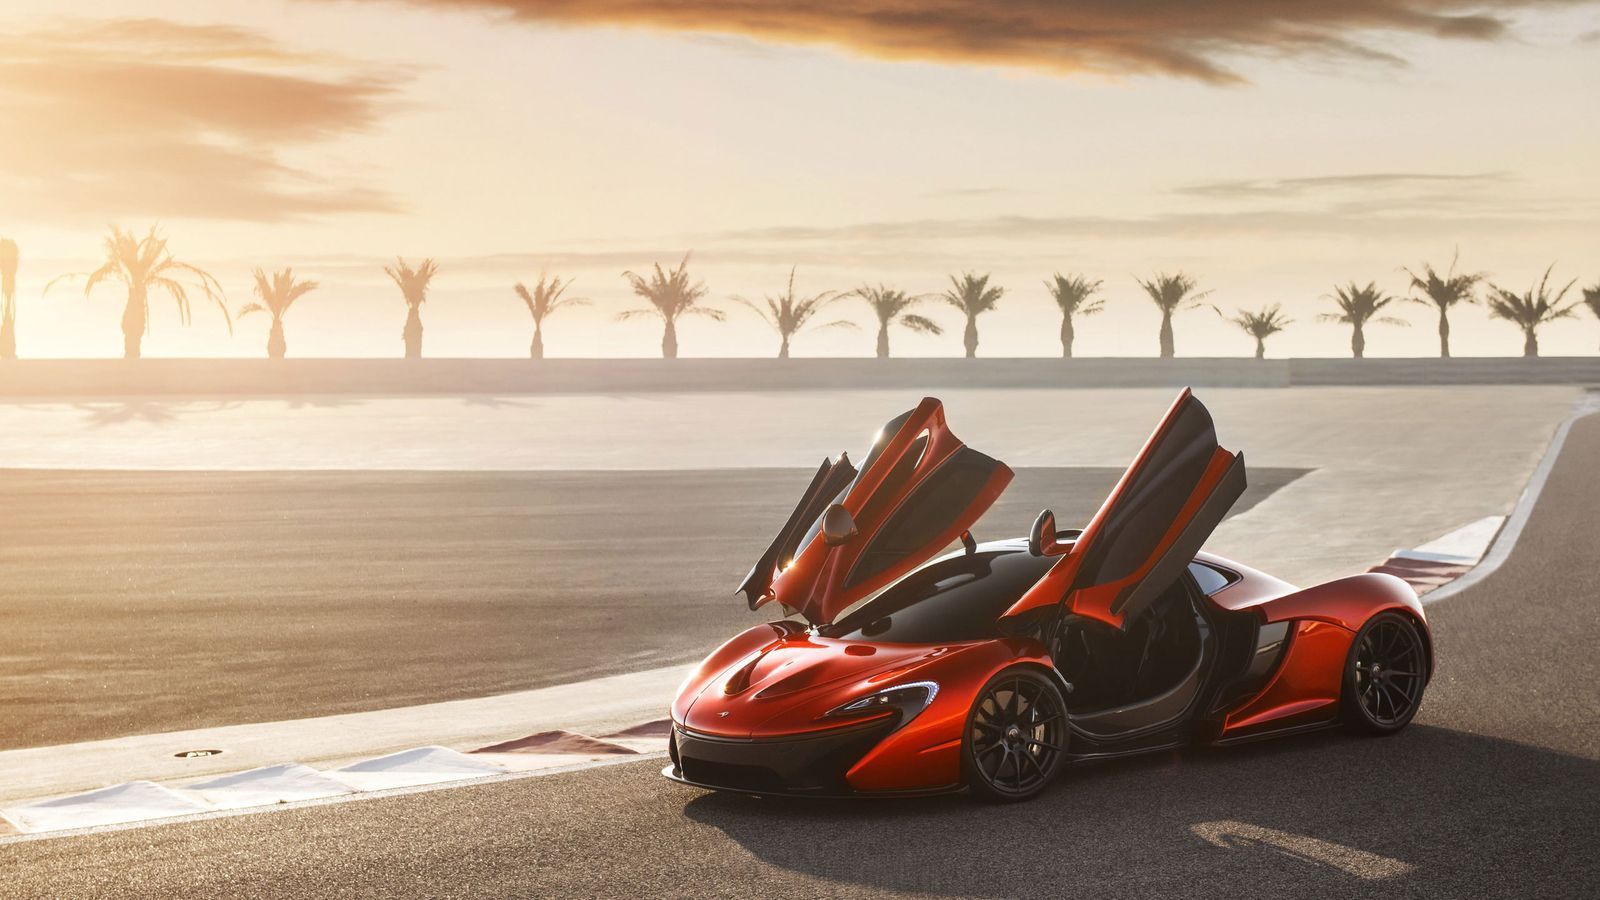 McLaren supercar wallpaper download 49700 - Automotive Wallpapers